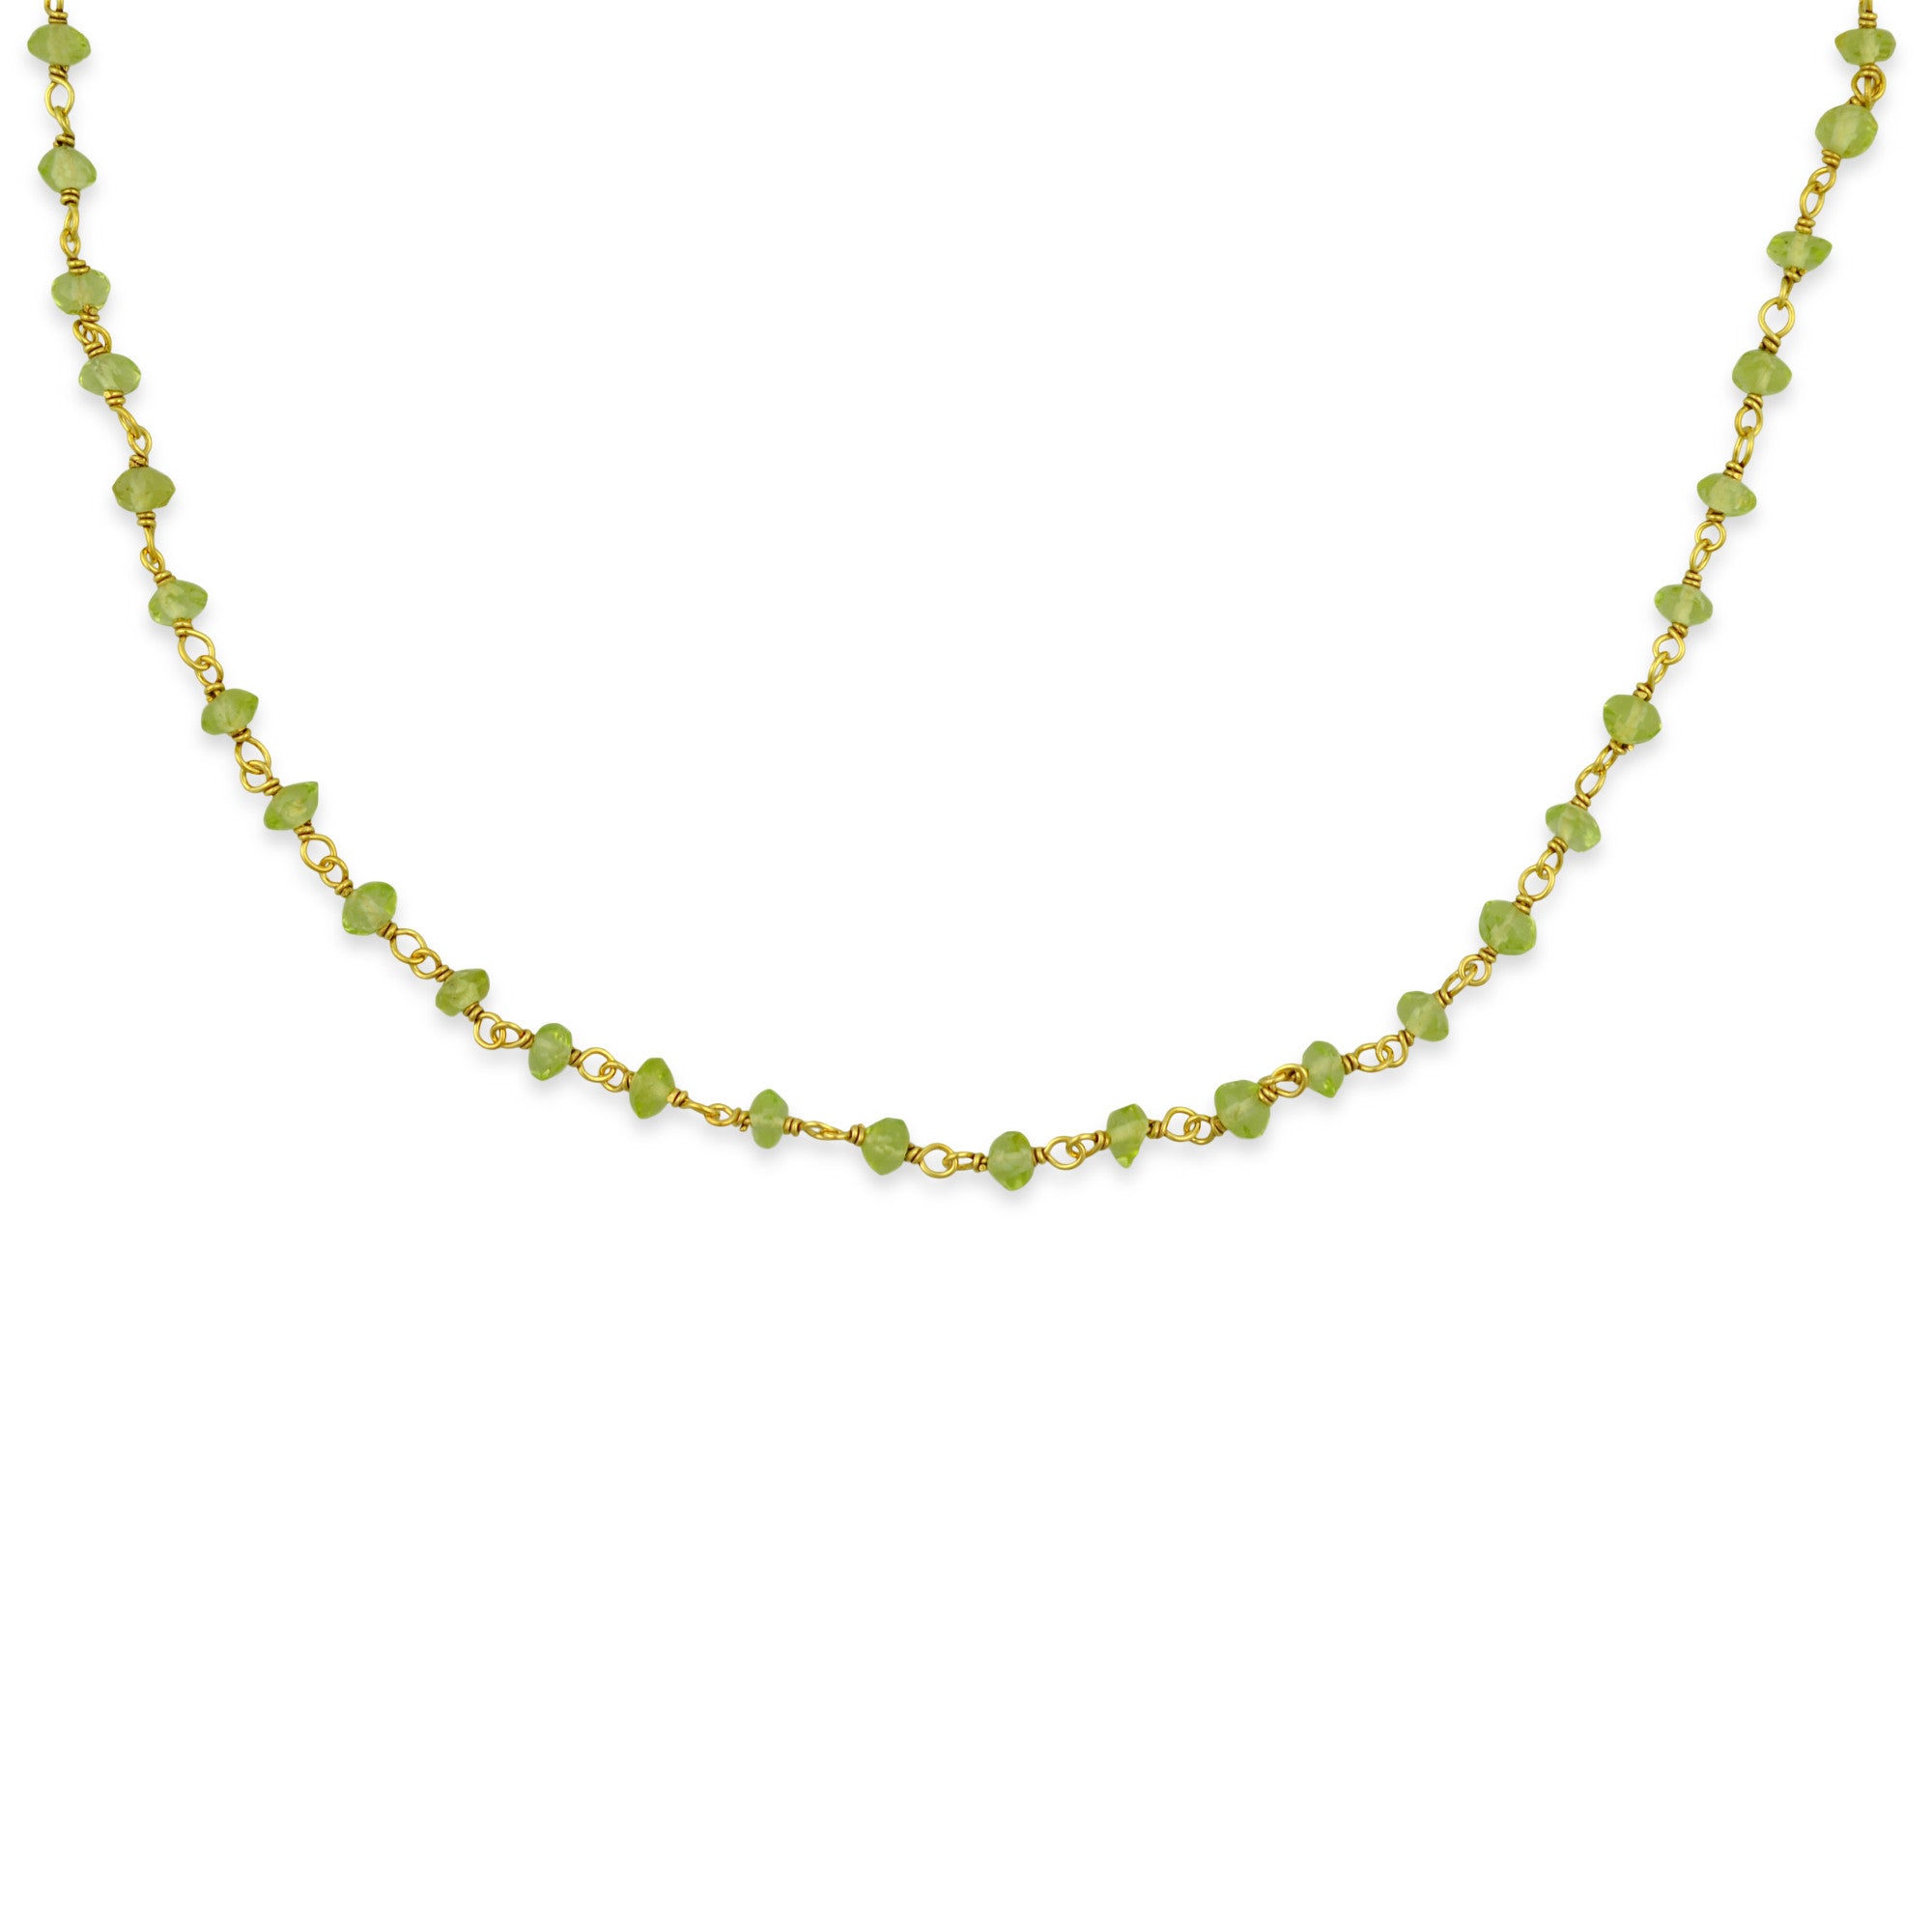 Rosario Gem necklace Κολιέ ροζάριο με ημιπολύτιμη πέτρα (peridot-goldplated)